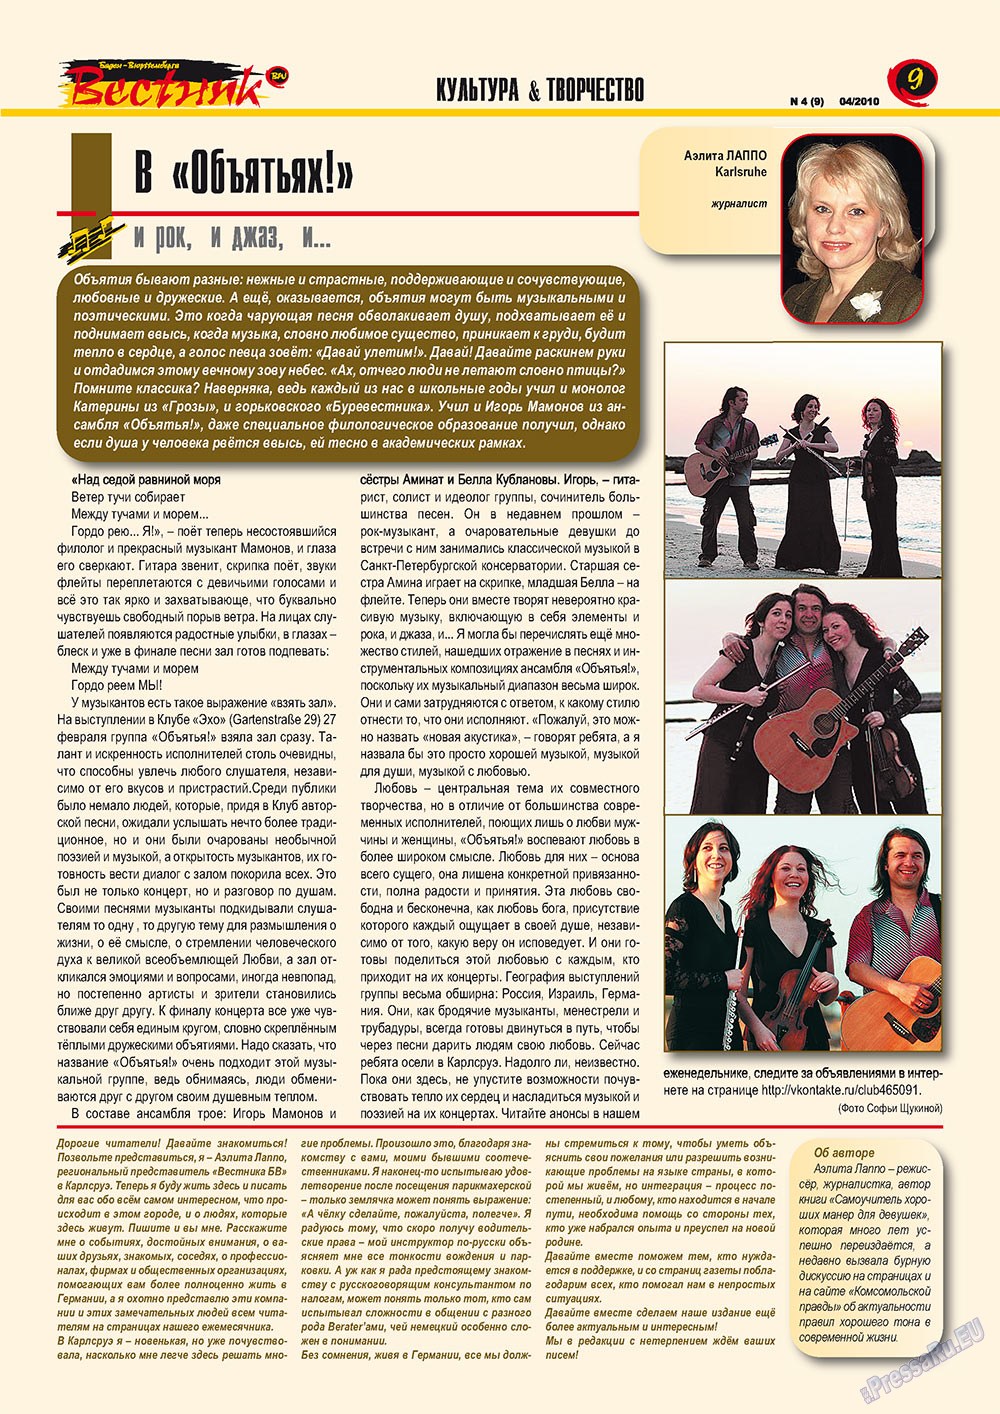 Вестник-info (журнал). 2009 год, номер 3, стр. 9